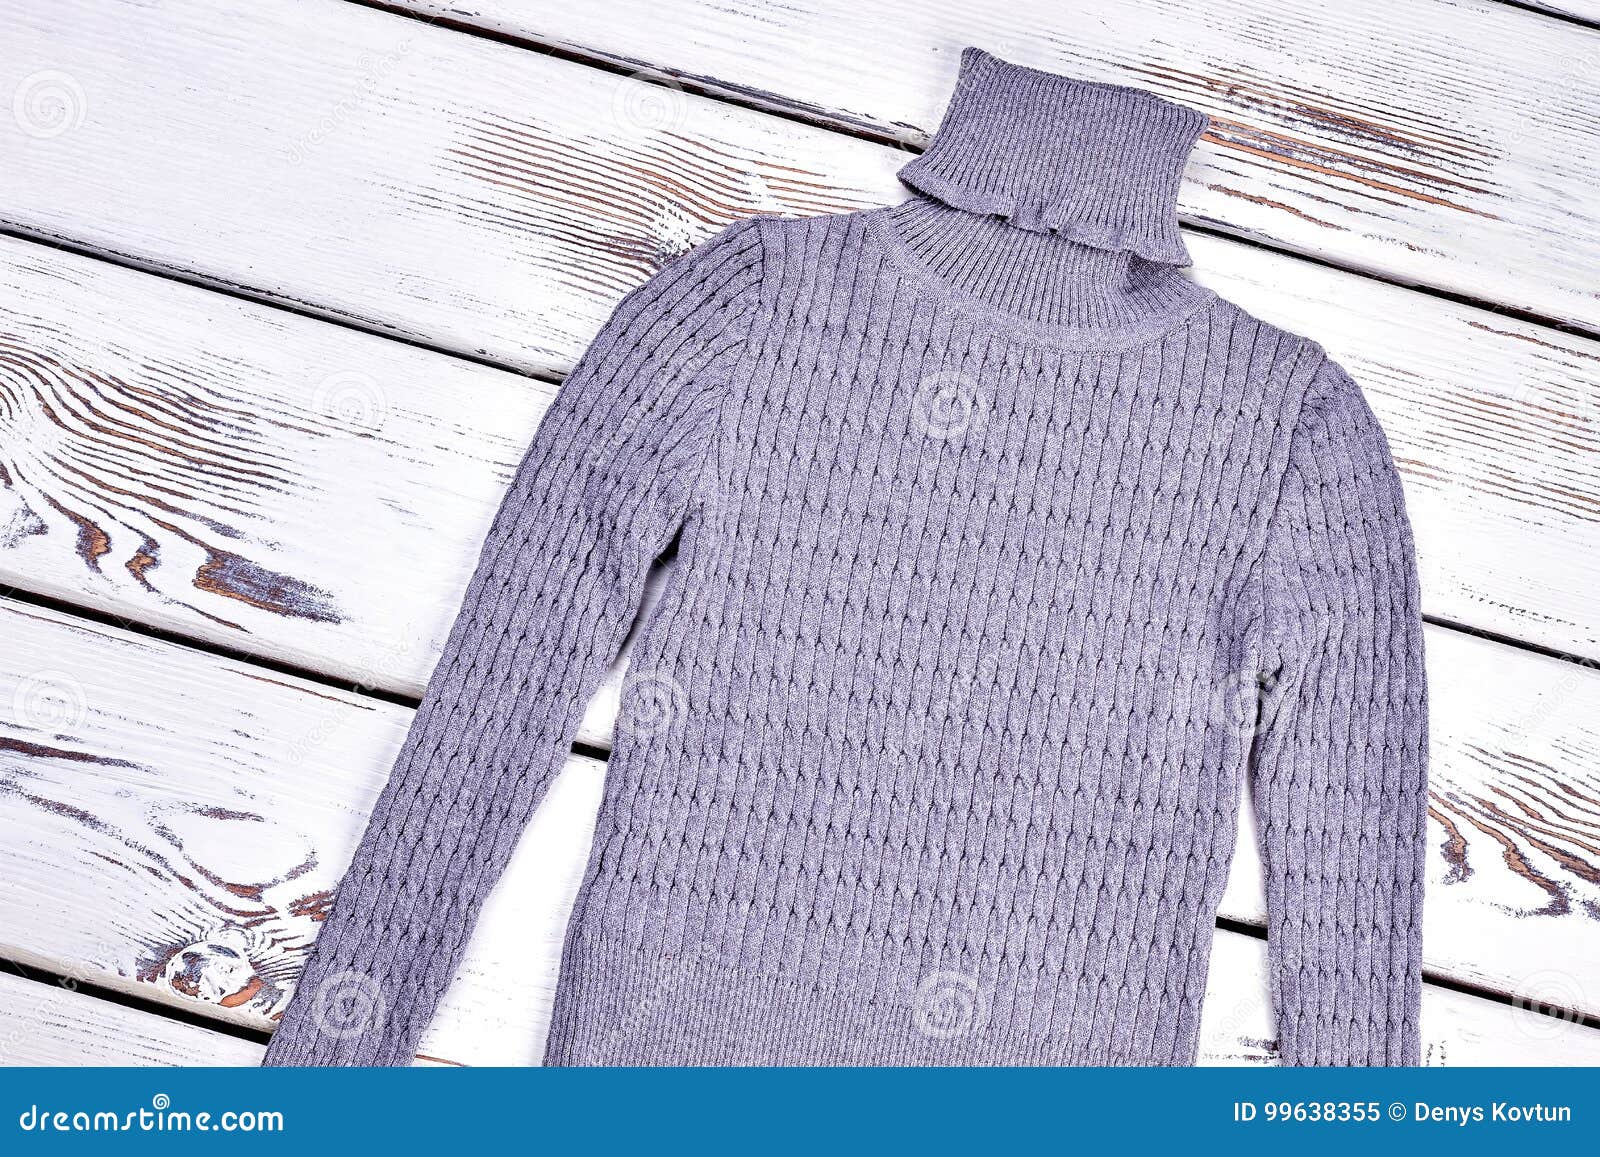 Boys Turtleneck Warm Gray Sweater. Stock Image - Image of design ...